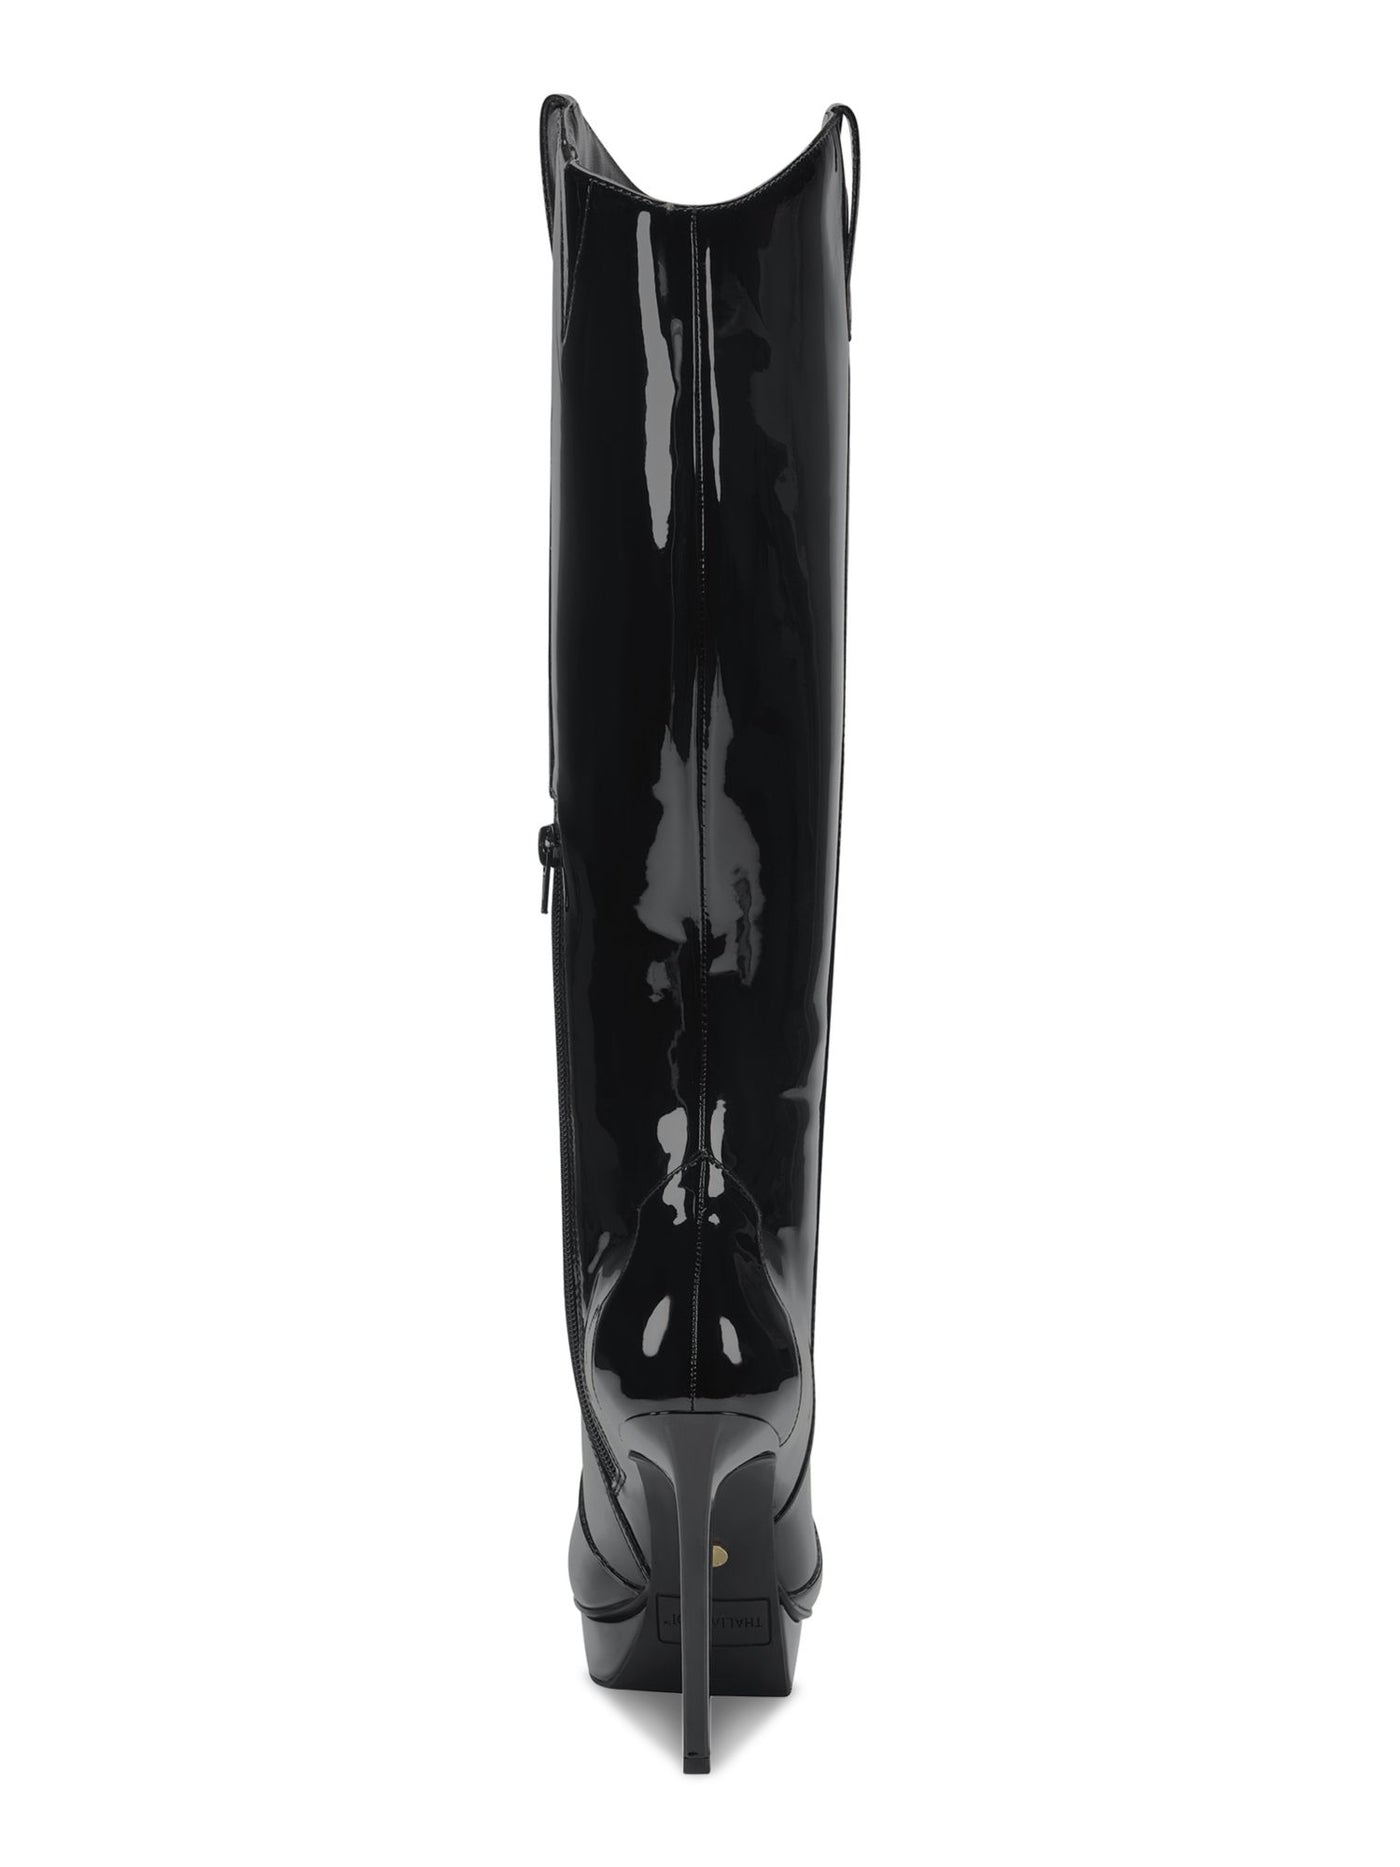 THALIA SODI Womens Black 3/4" Platform Comfort Trixi Pointy Toe Stiletto Zip-Up Dress Boots 10 M